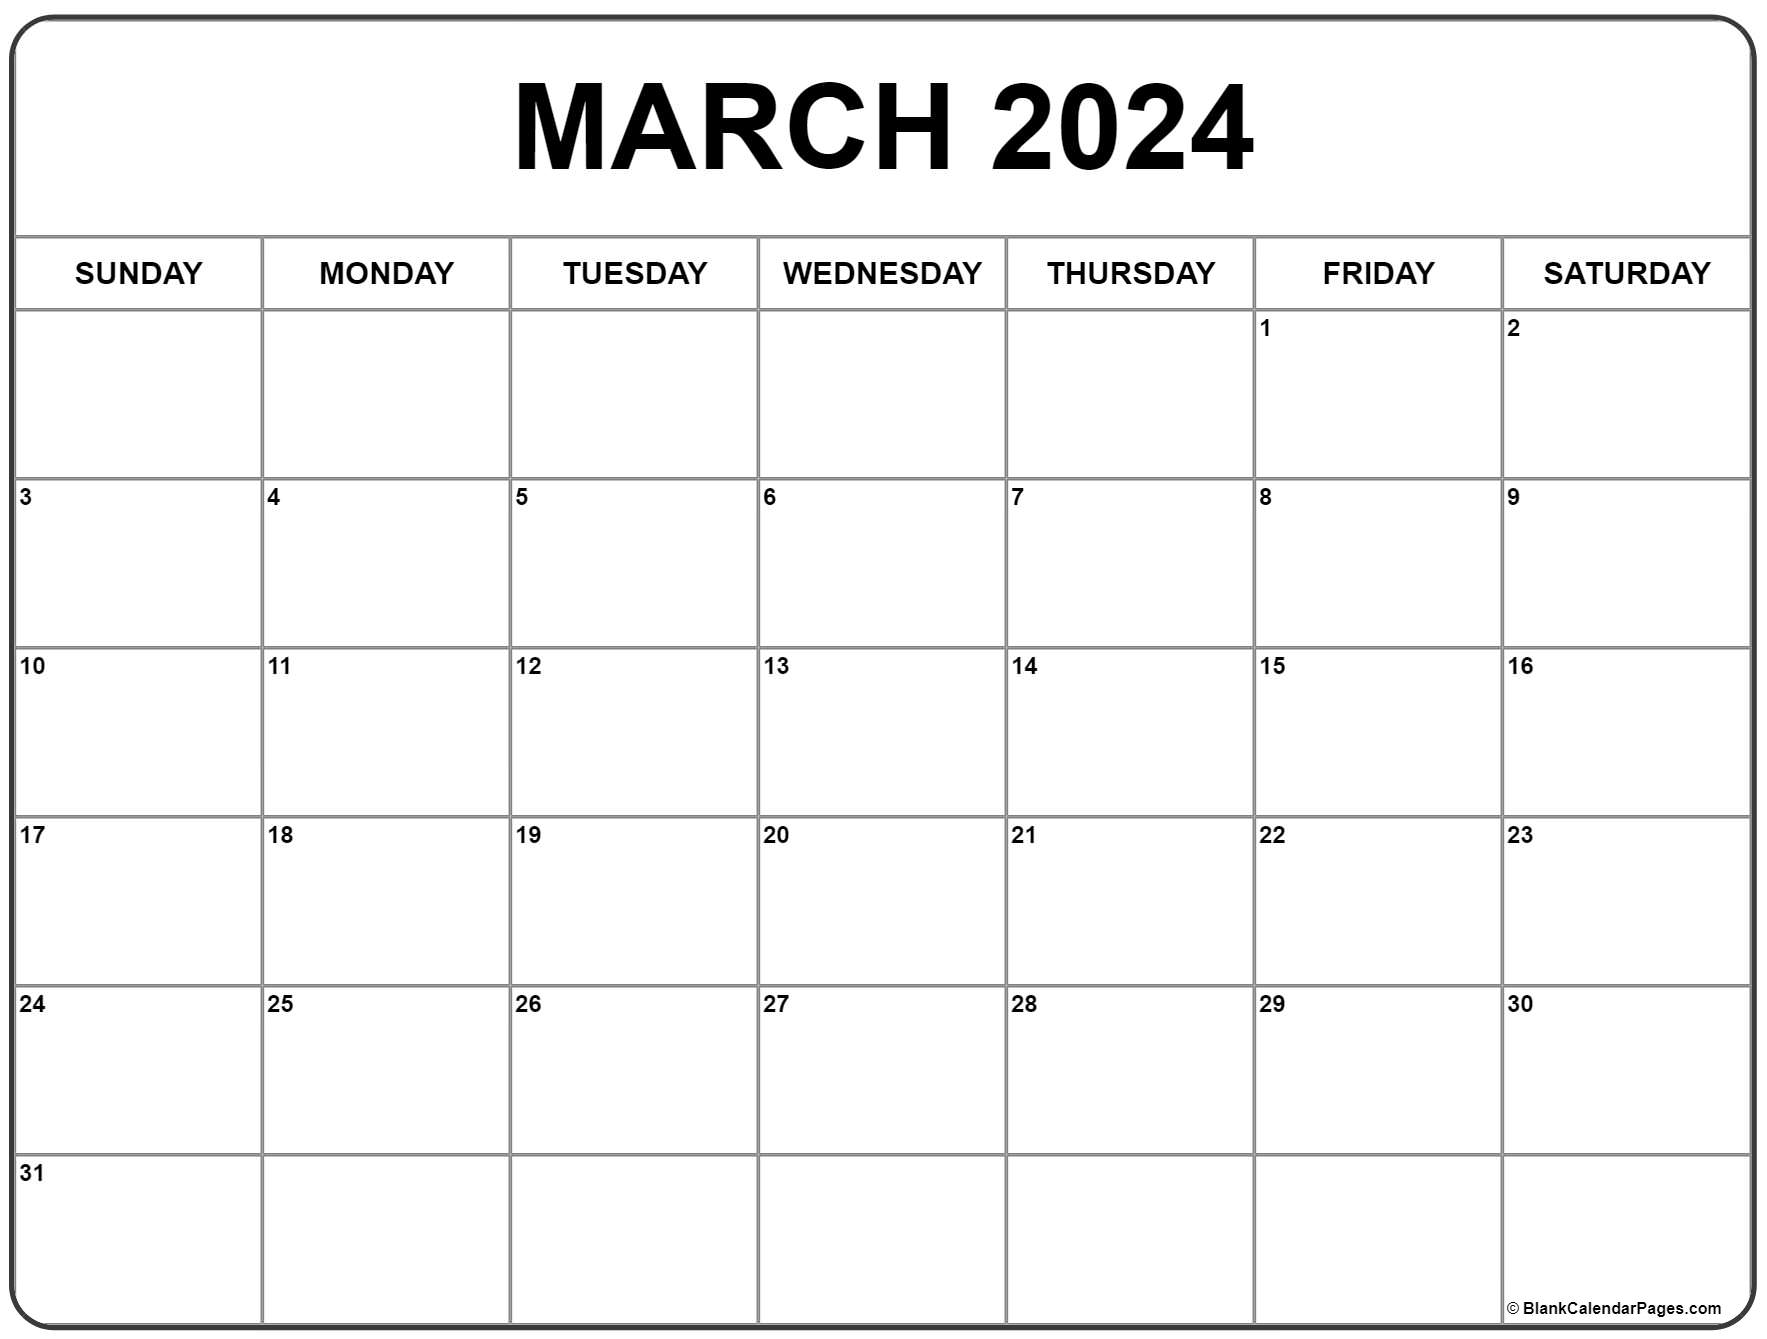 March 2024 Calendar | Free Printable Calendar for Printable 2024 Calendar March